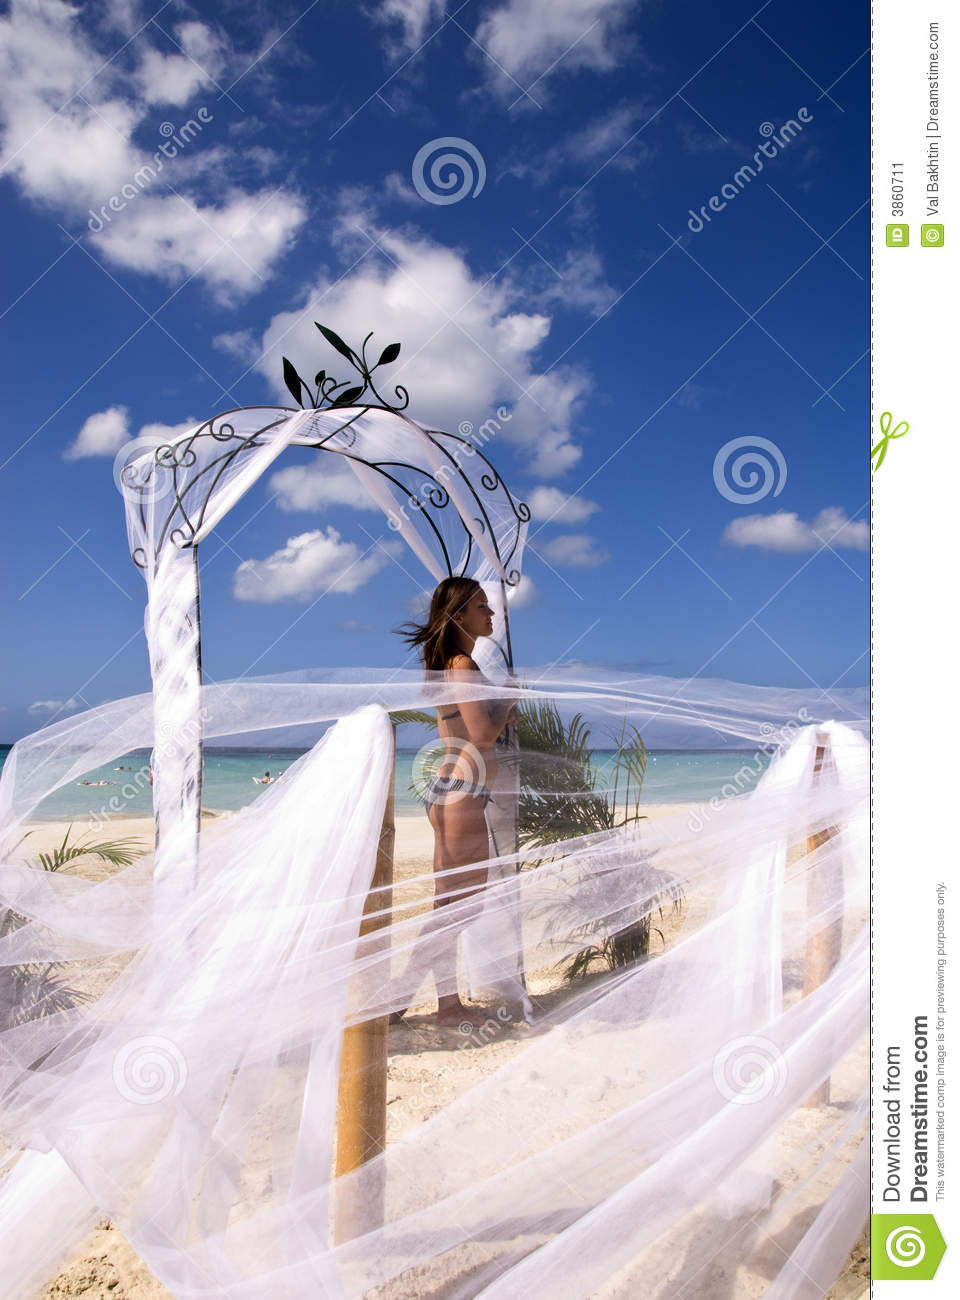 Pretty Girl On Jamaica Beach Stock Image   Image  3860711